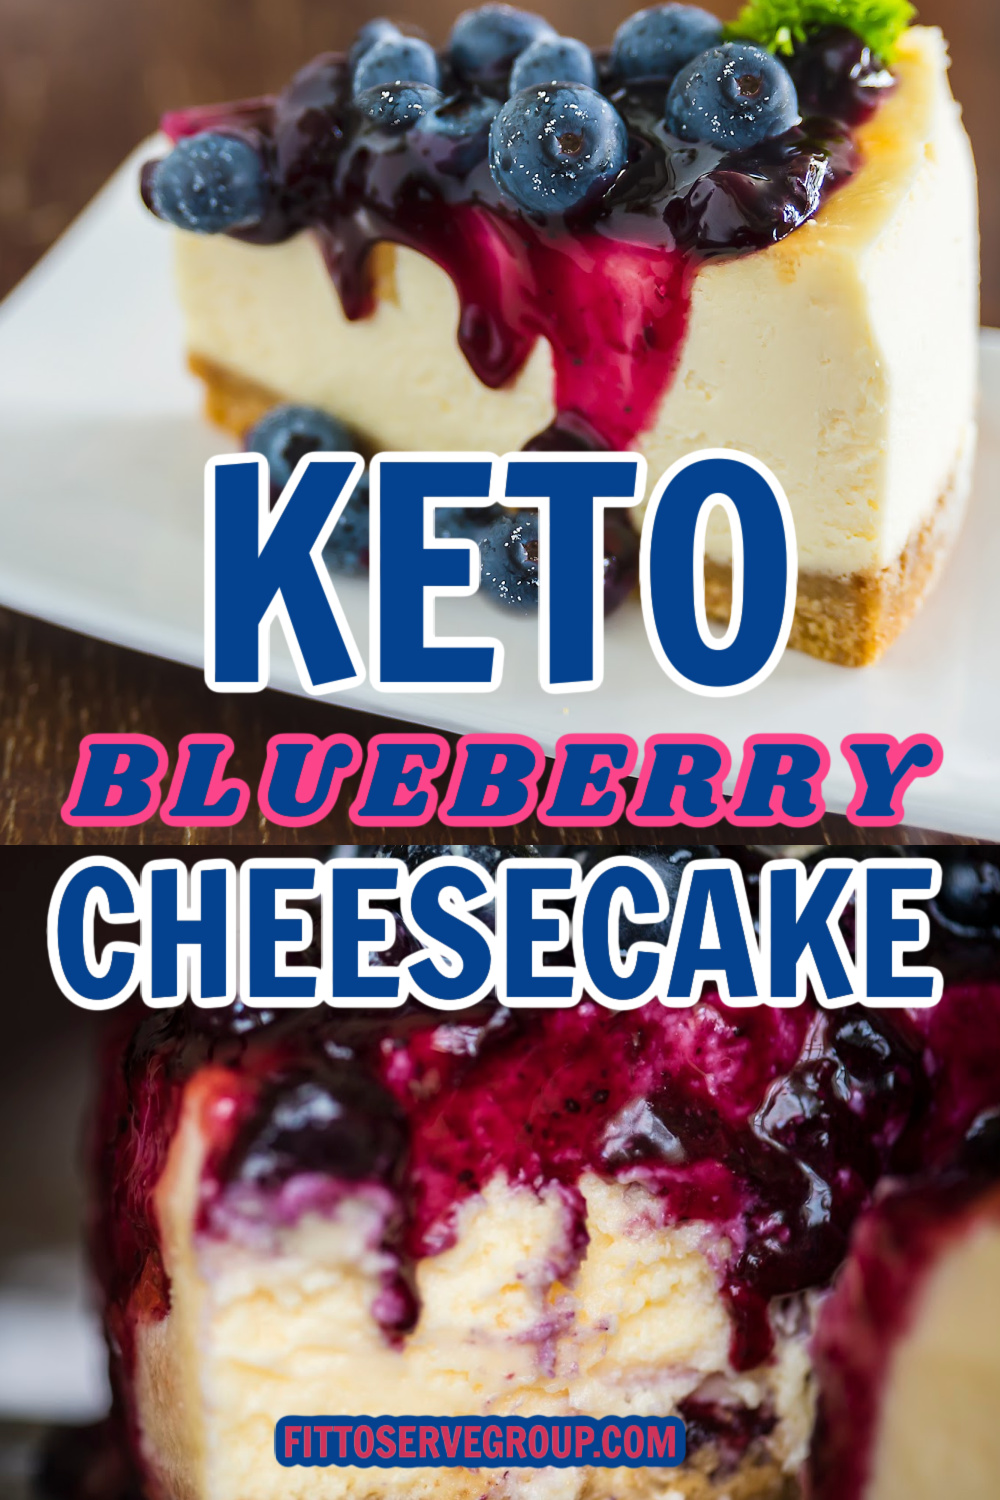 Keto-Friendly Blueberry Cheesecake